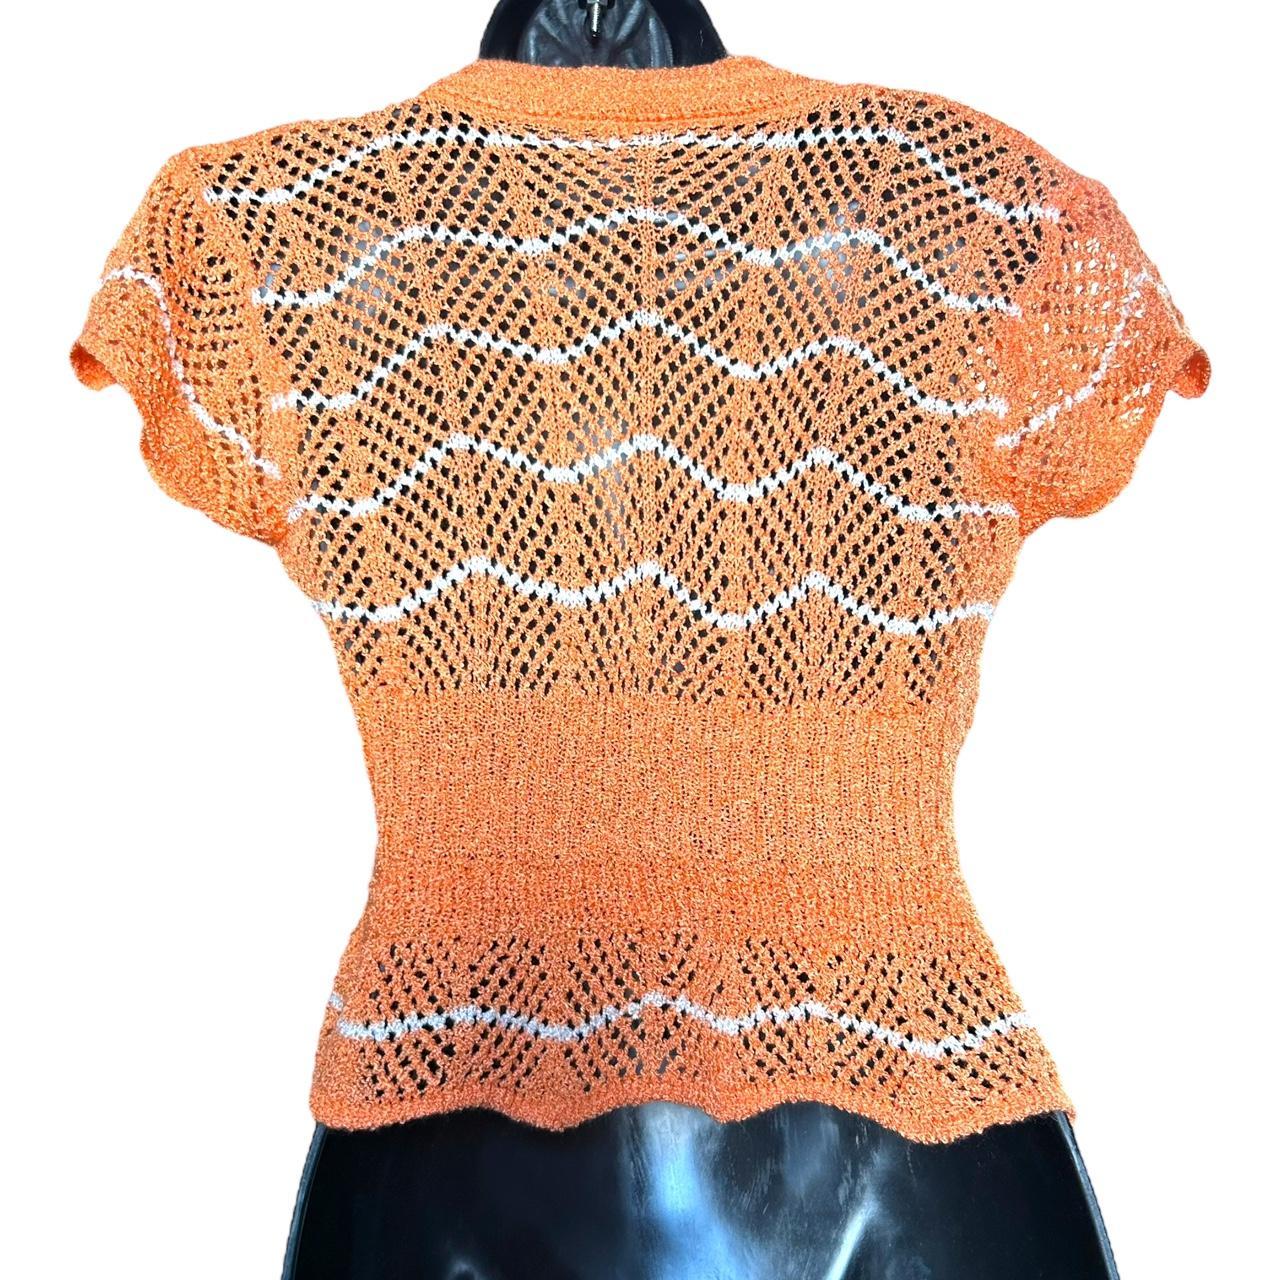 70s orange knitted mesh shrug cardi S/M